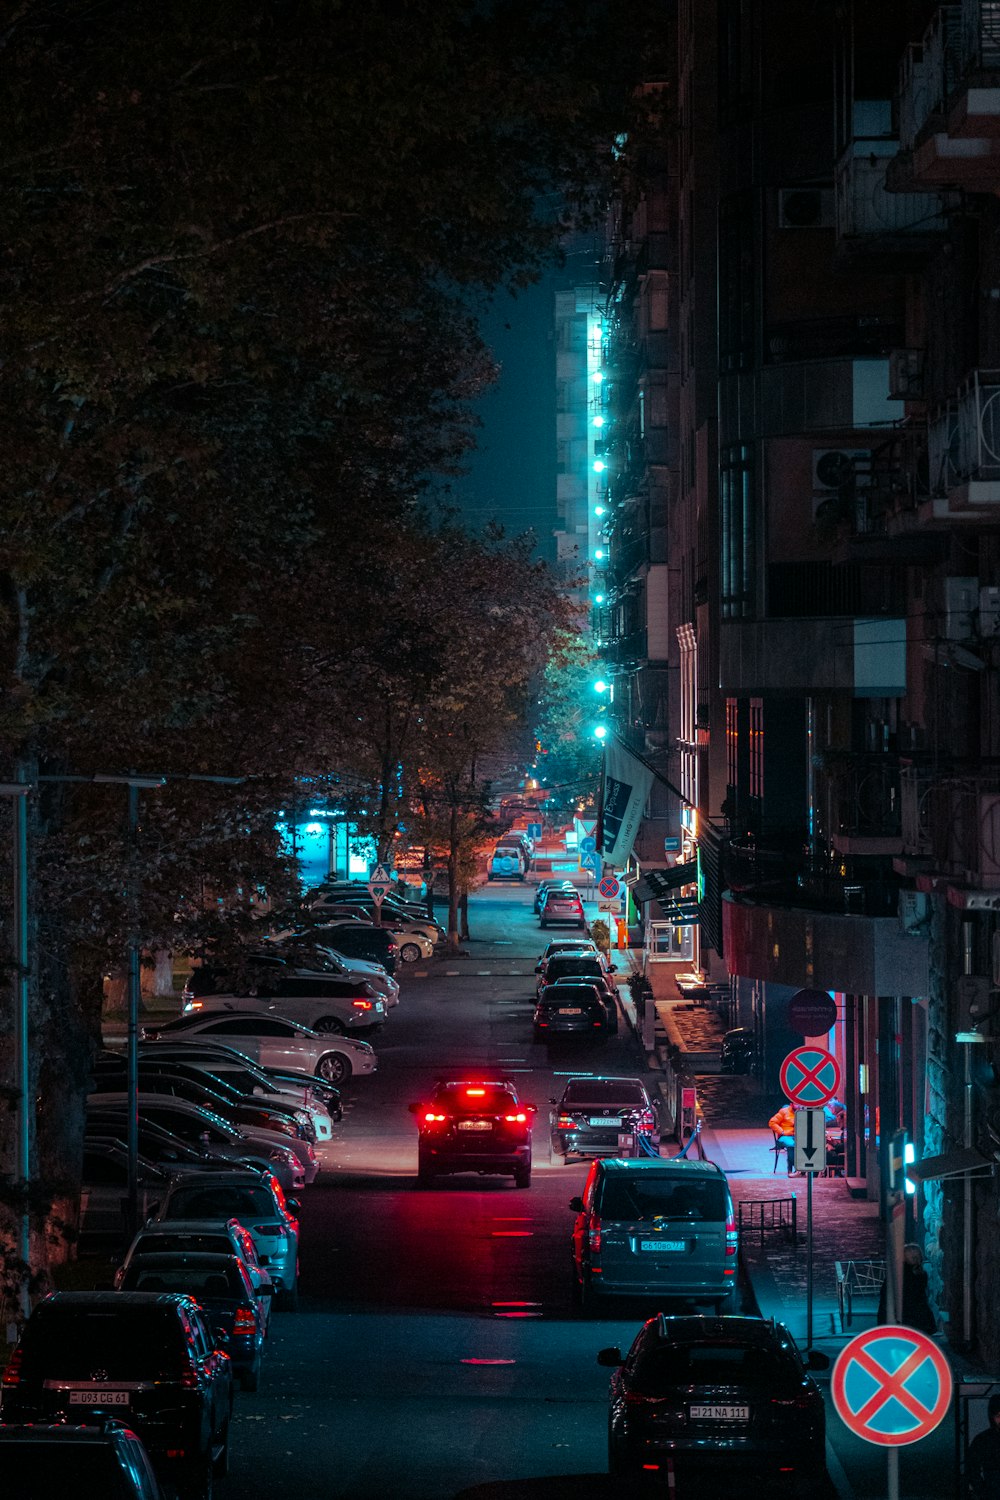 Una calle concurrida por la noche